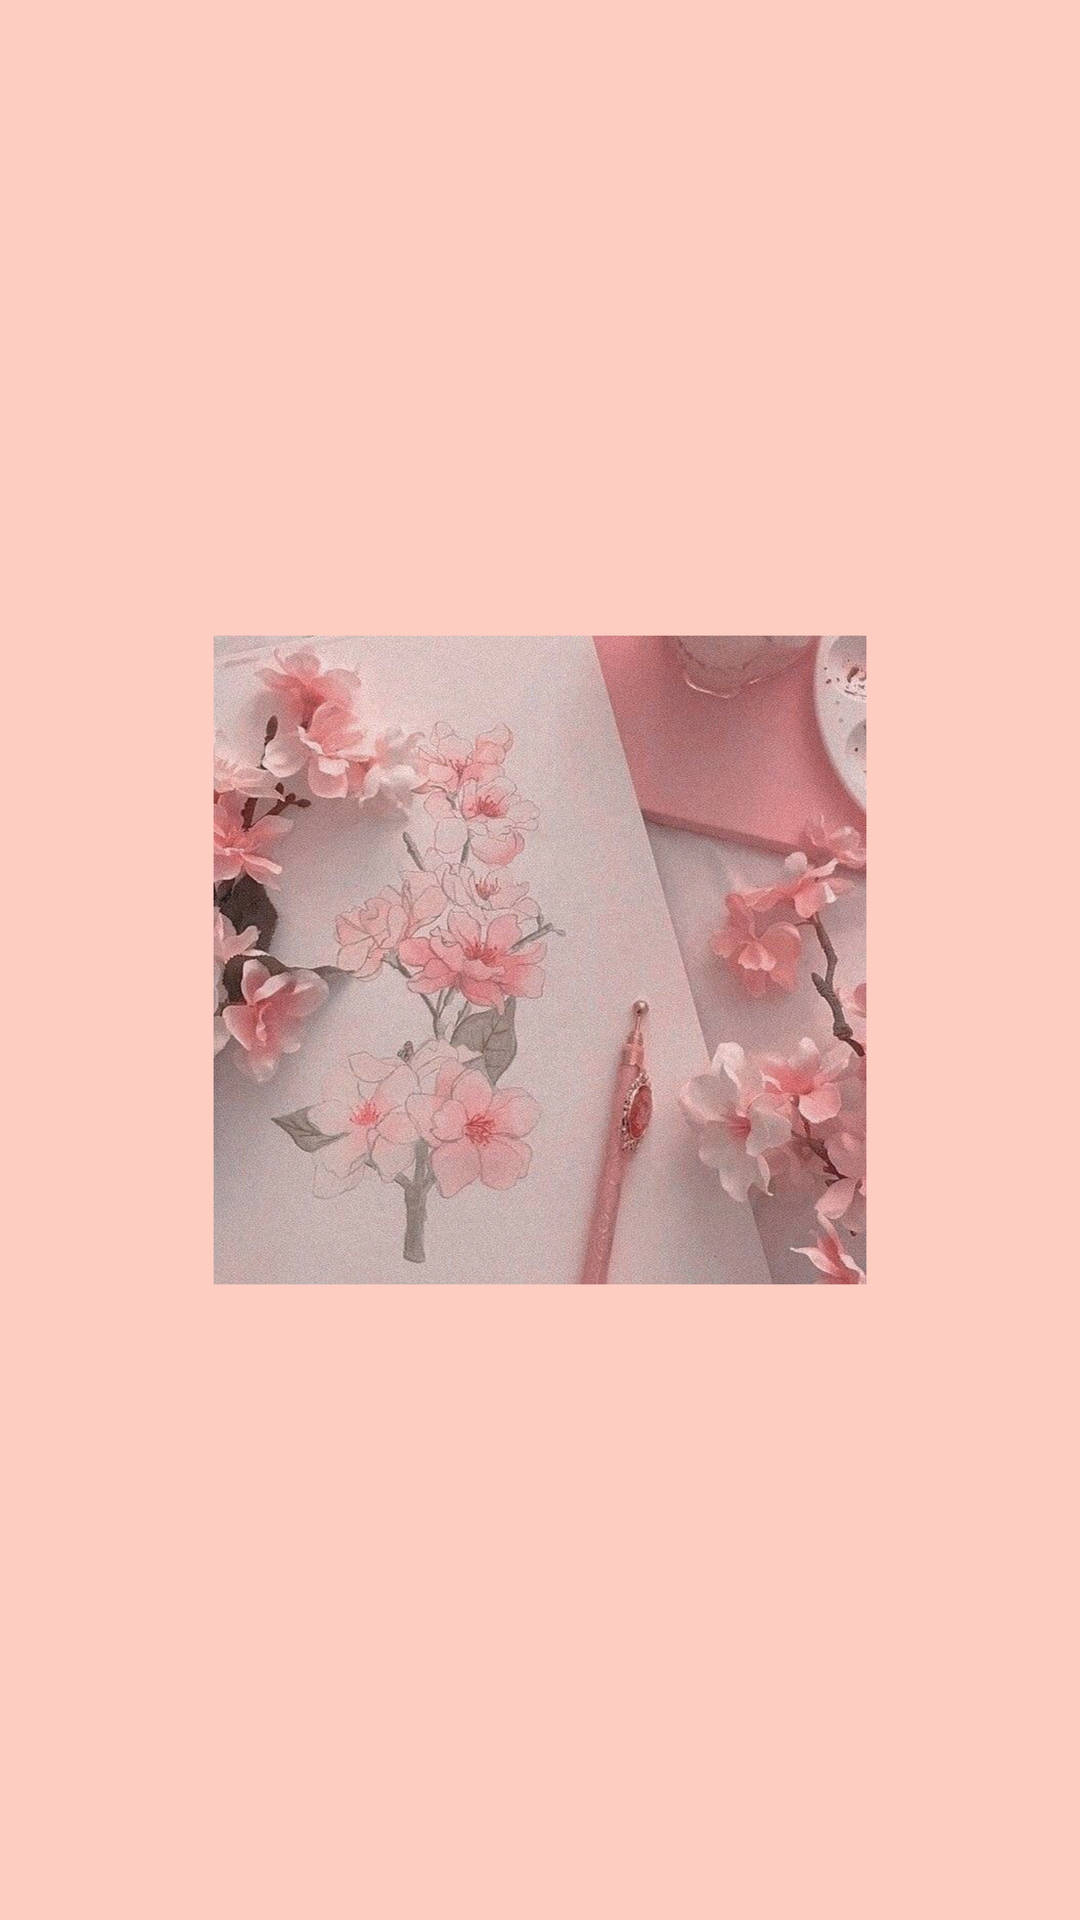 Cool Aesthetic Sakura Flowers Wallpaper